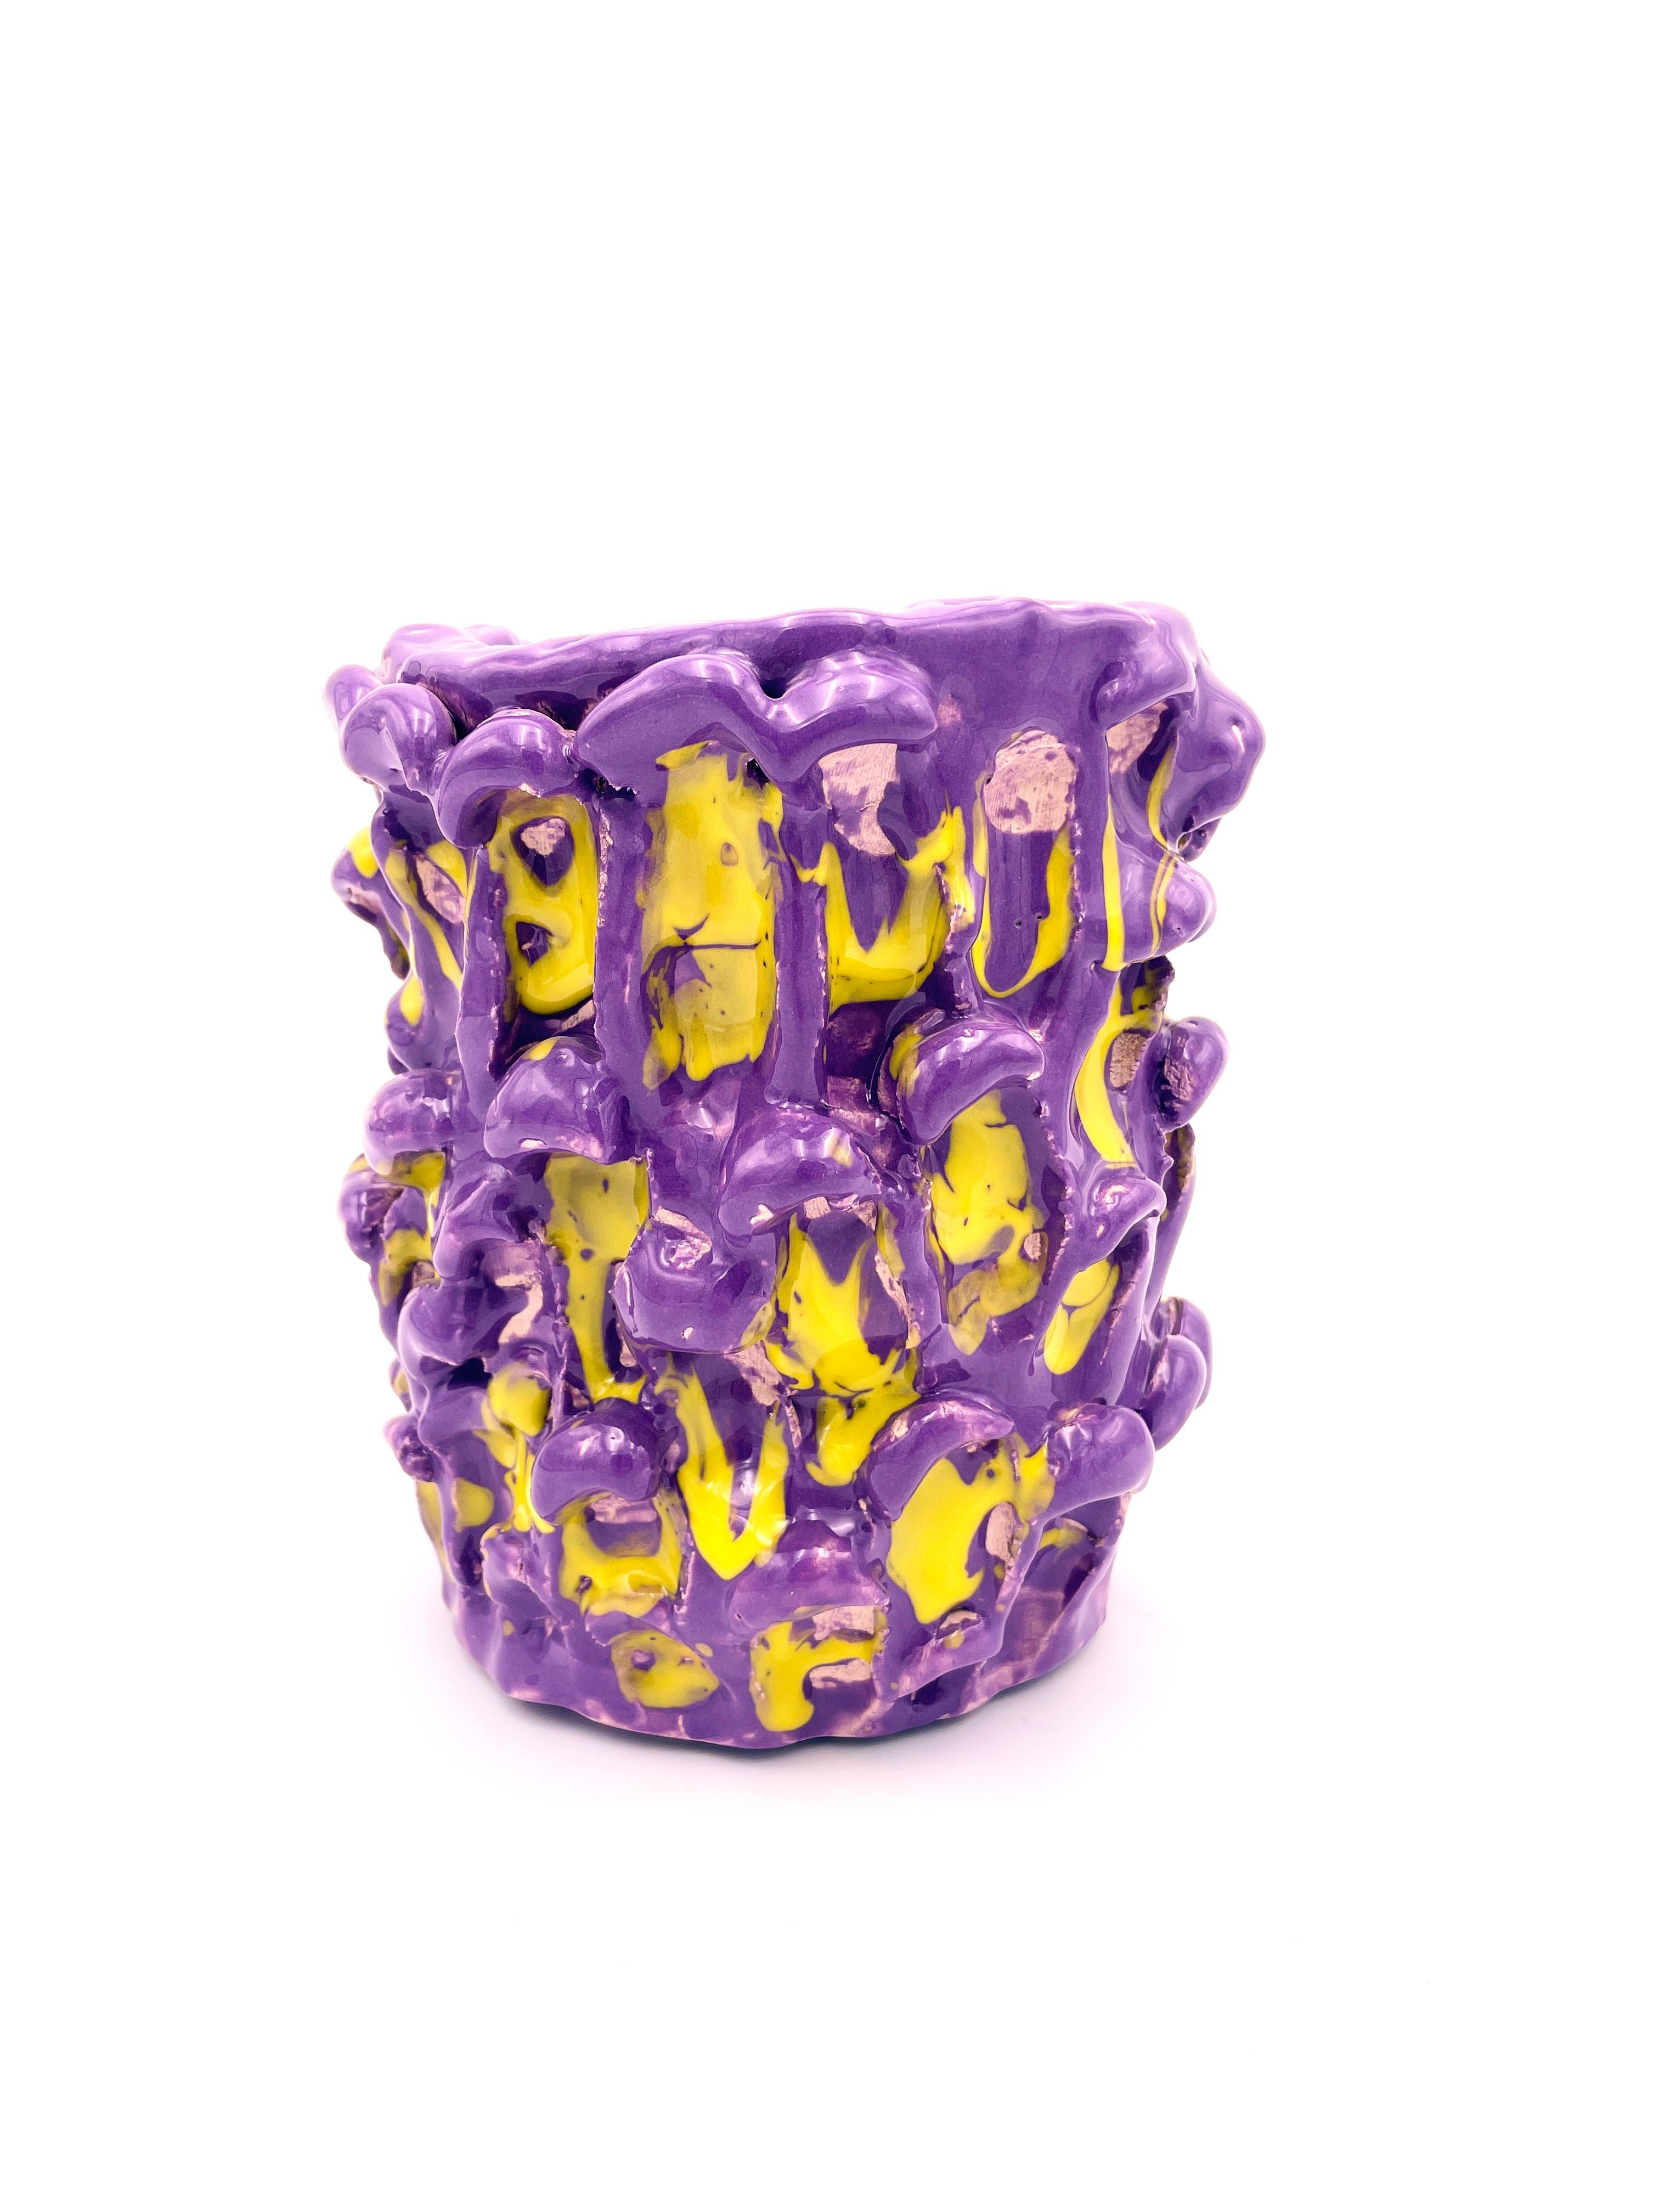 Onda Vase in Velvet Purple and Lemon Yellow 01 / 20 numbered serie
Unique Handmade Piece
Glazed earthenware by Daria Dazzan
Earthenware, glazes
18 X 16 cm ab.

Handmade earthenware vase by Daria Dazzan, unique piece, numbered.
Daria Dazzan